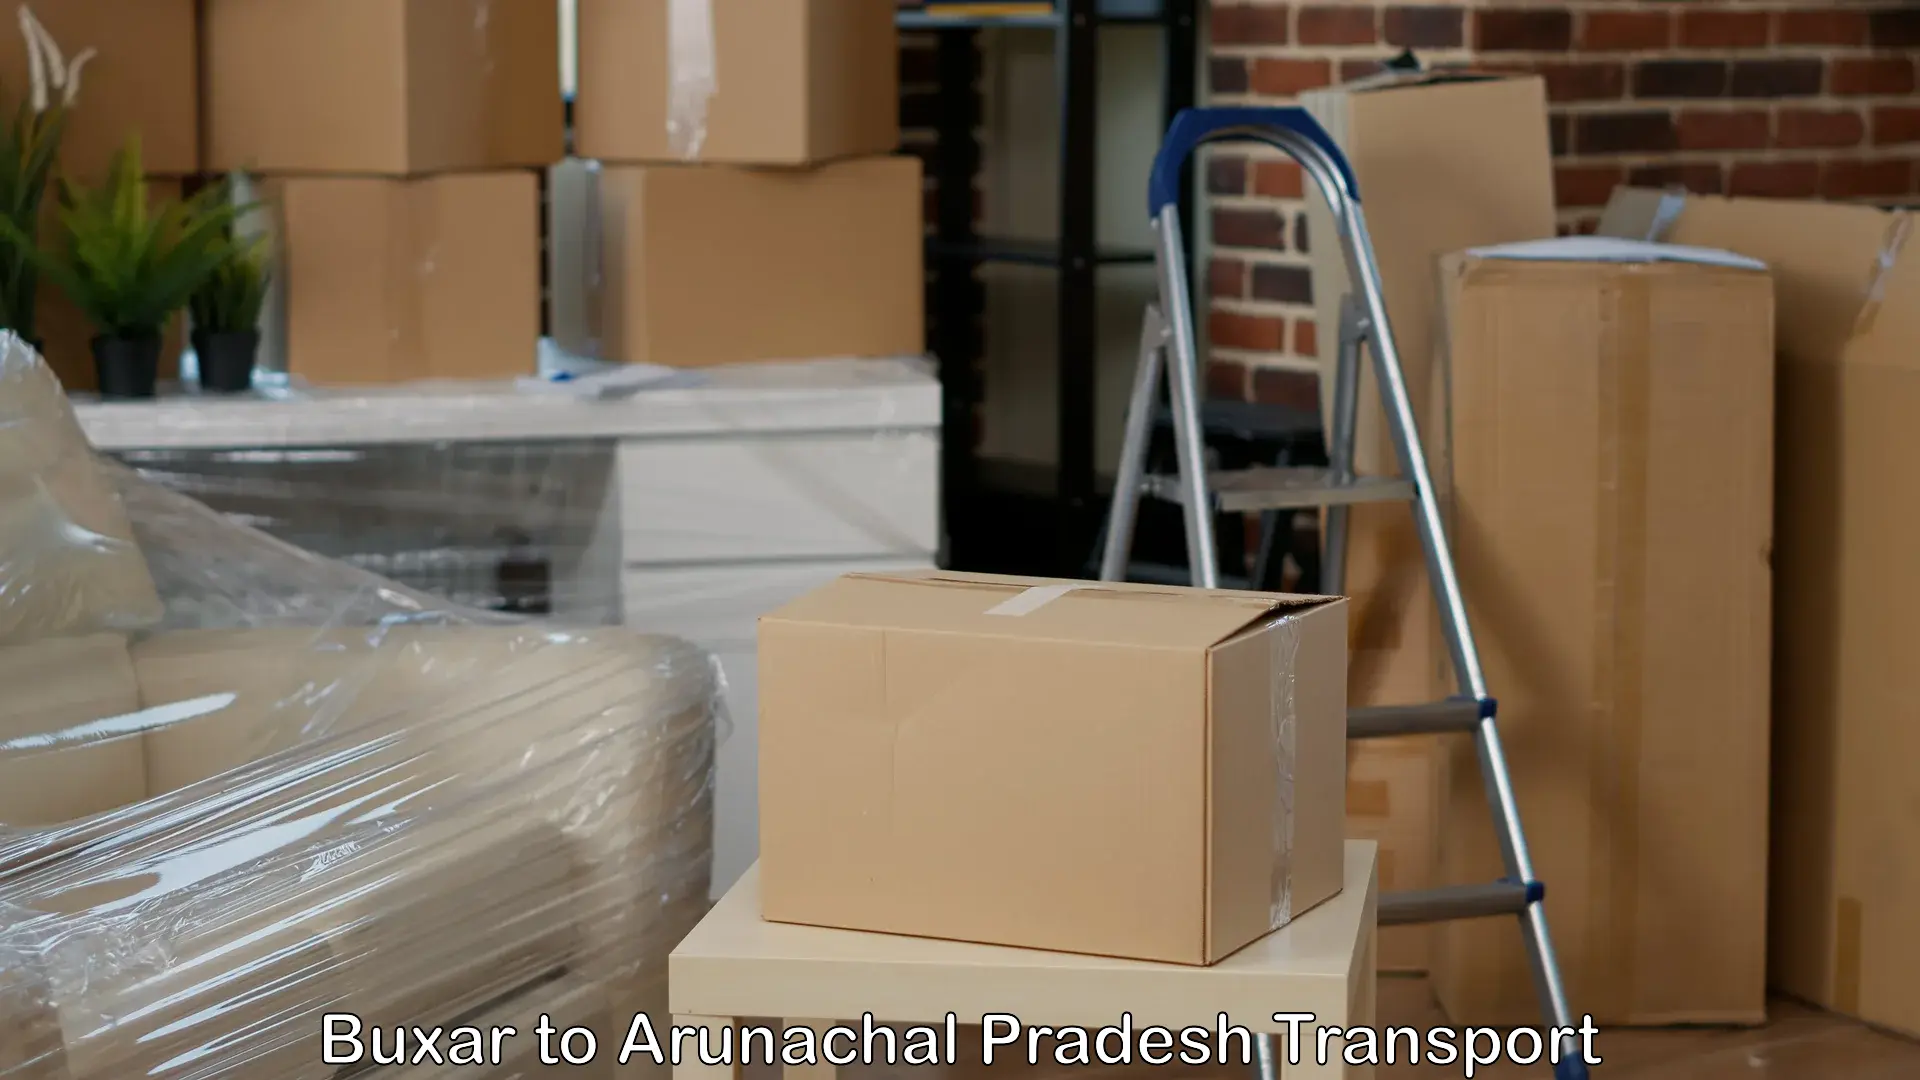 Truck transport companies in India Buxar to Lower Subansiri